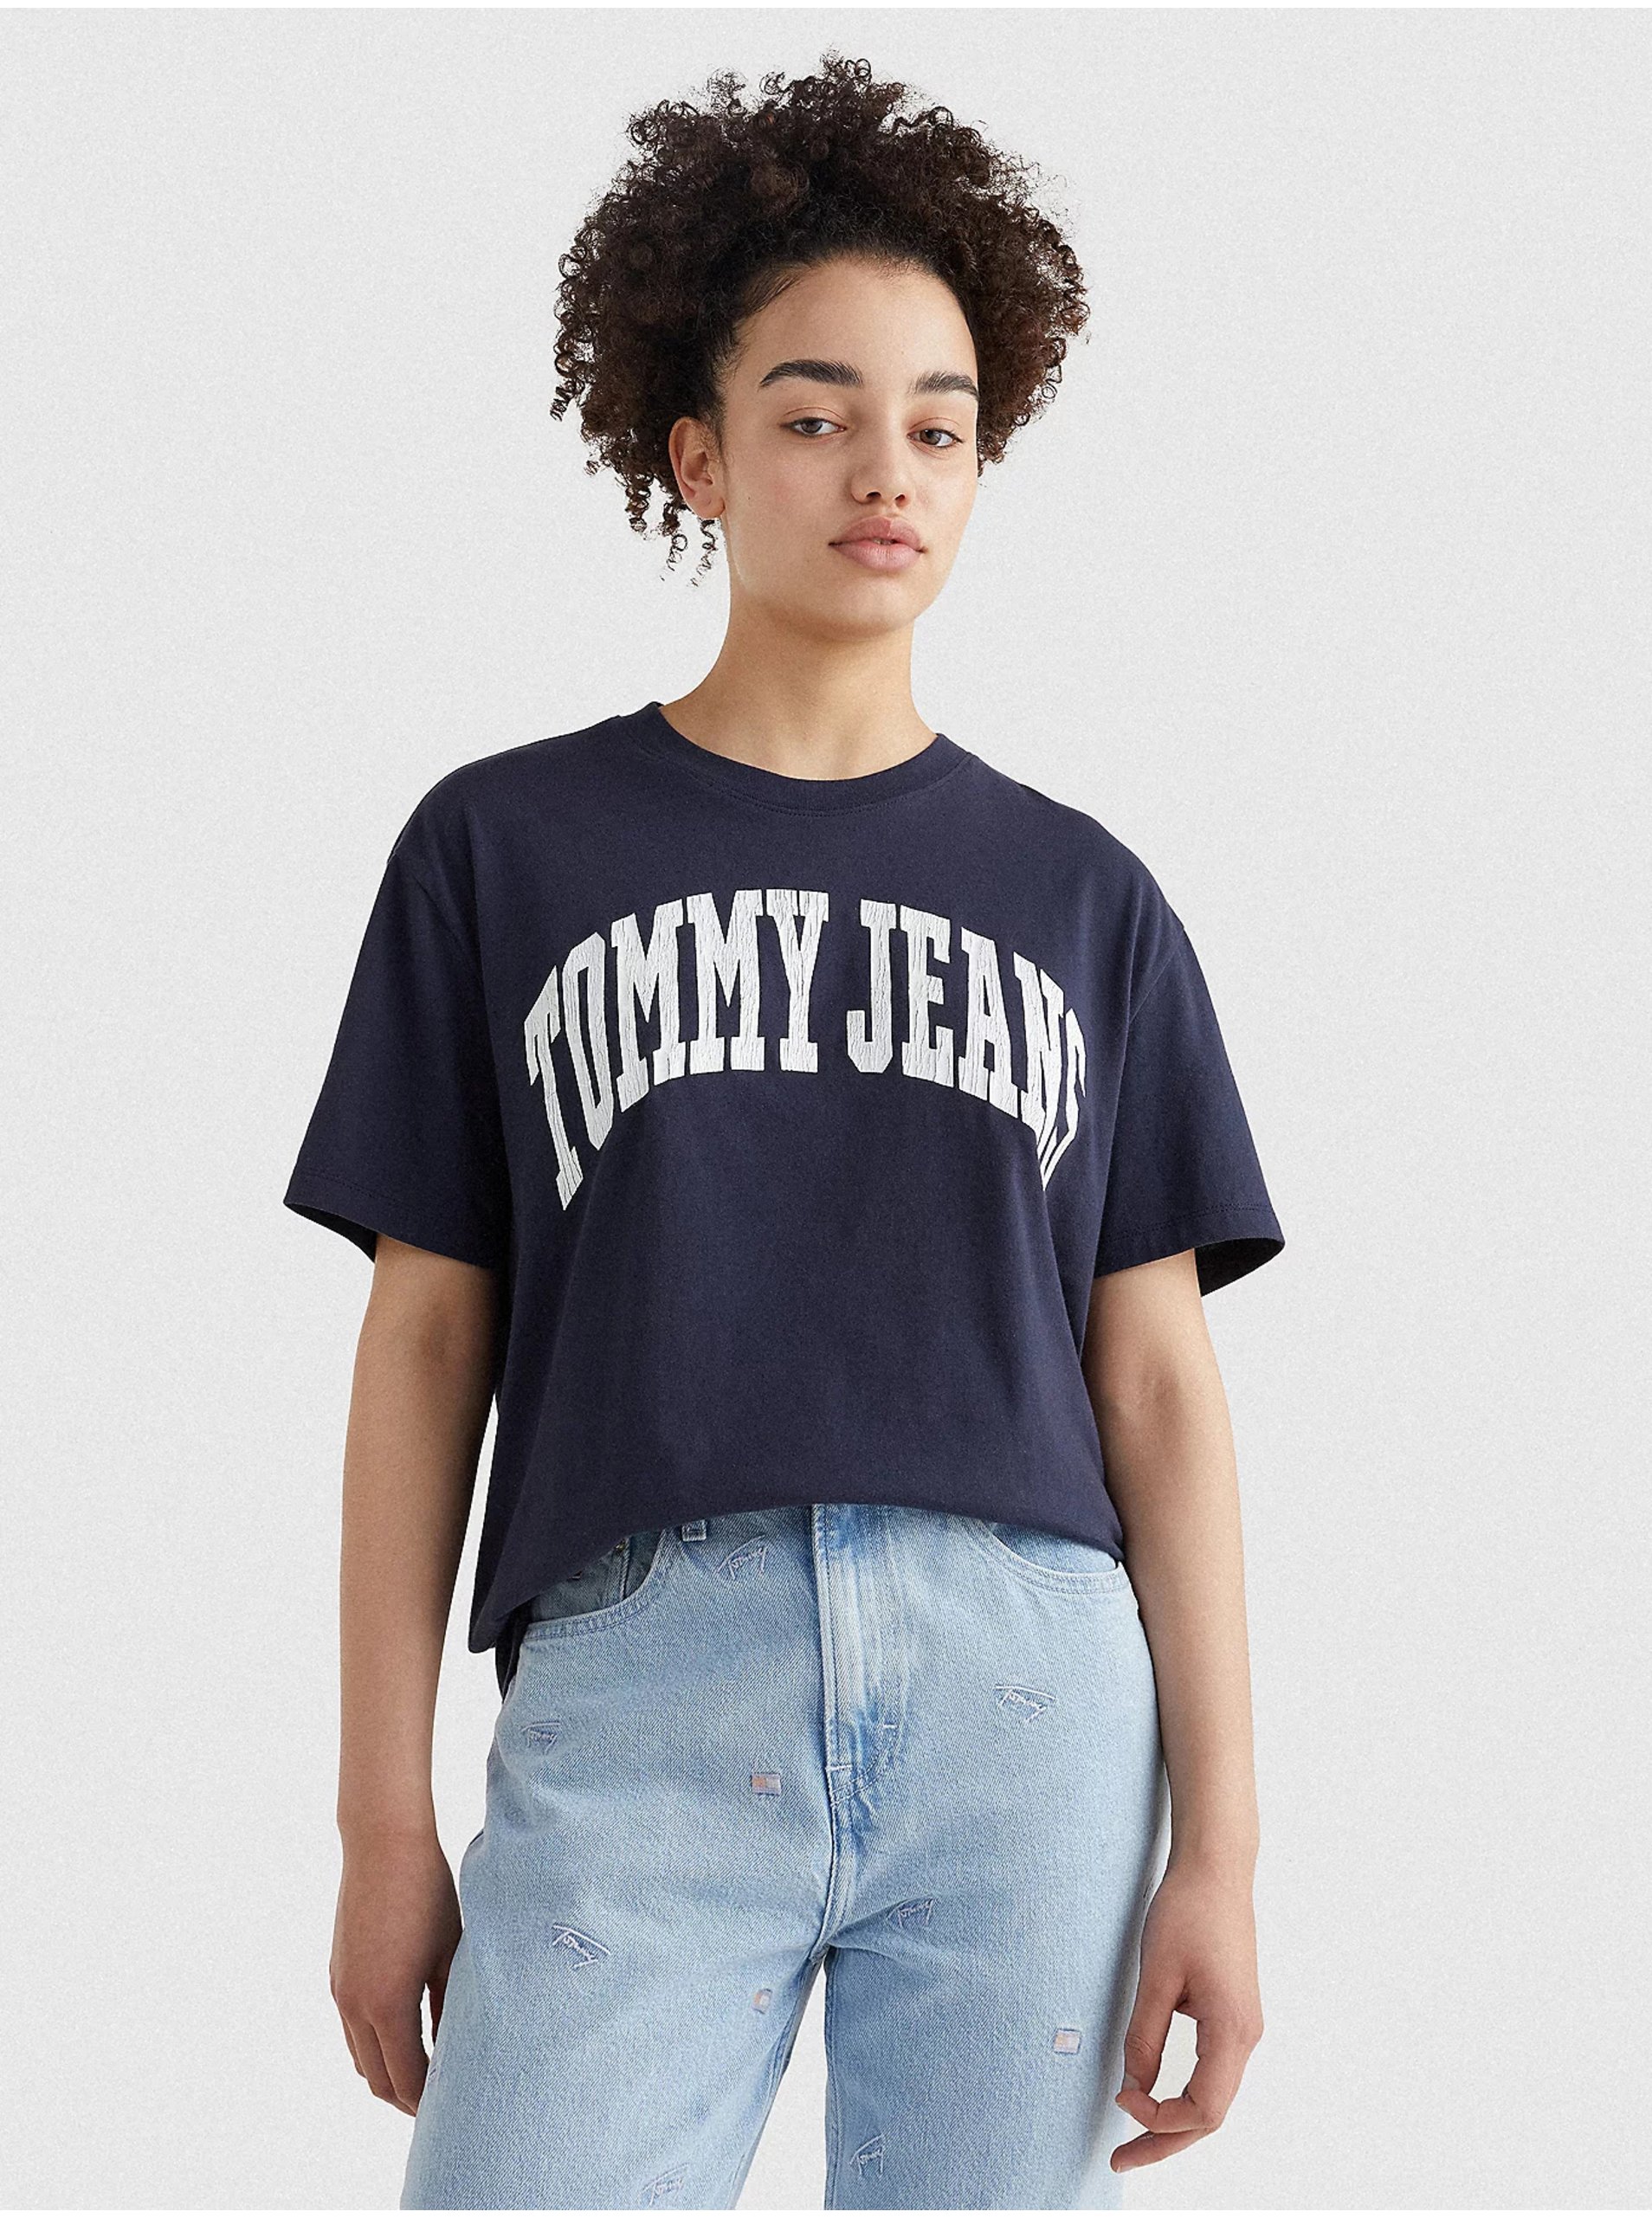 E-shop Tmavomodré dámske vzorované dlhé tričko Tommy Jeans